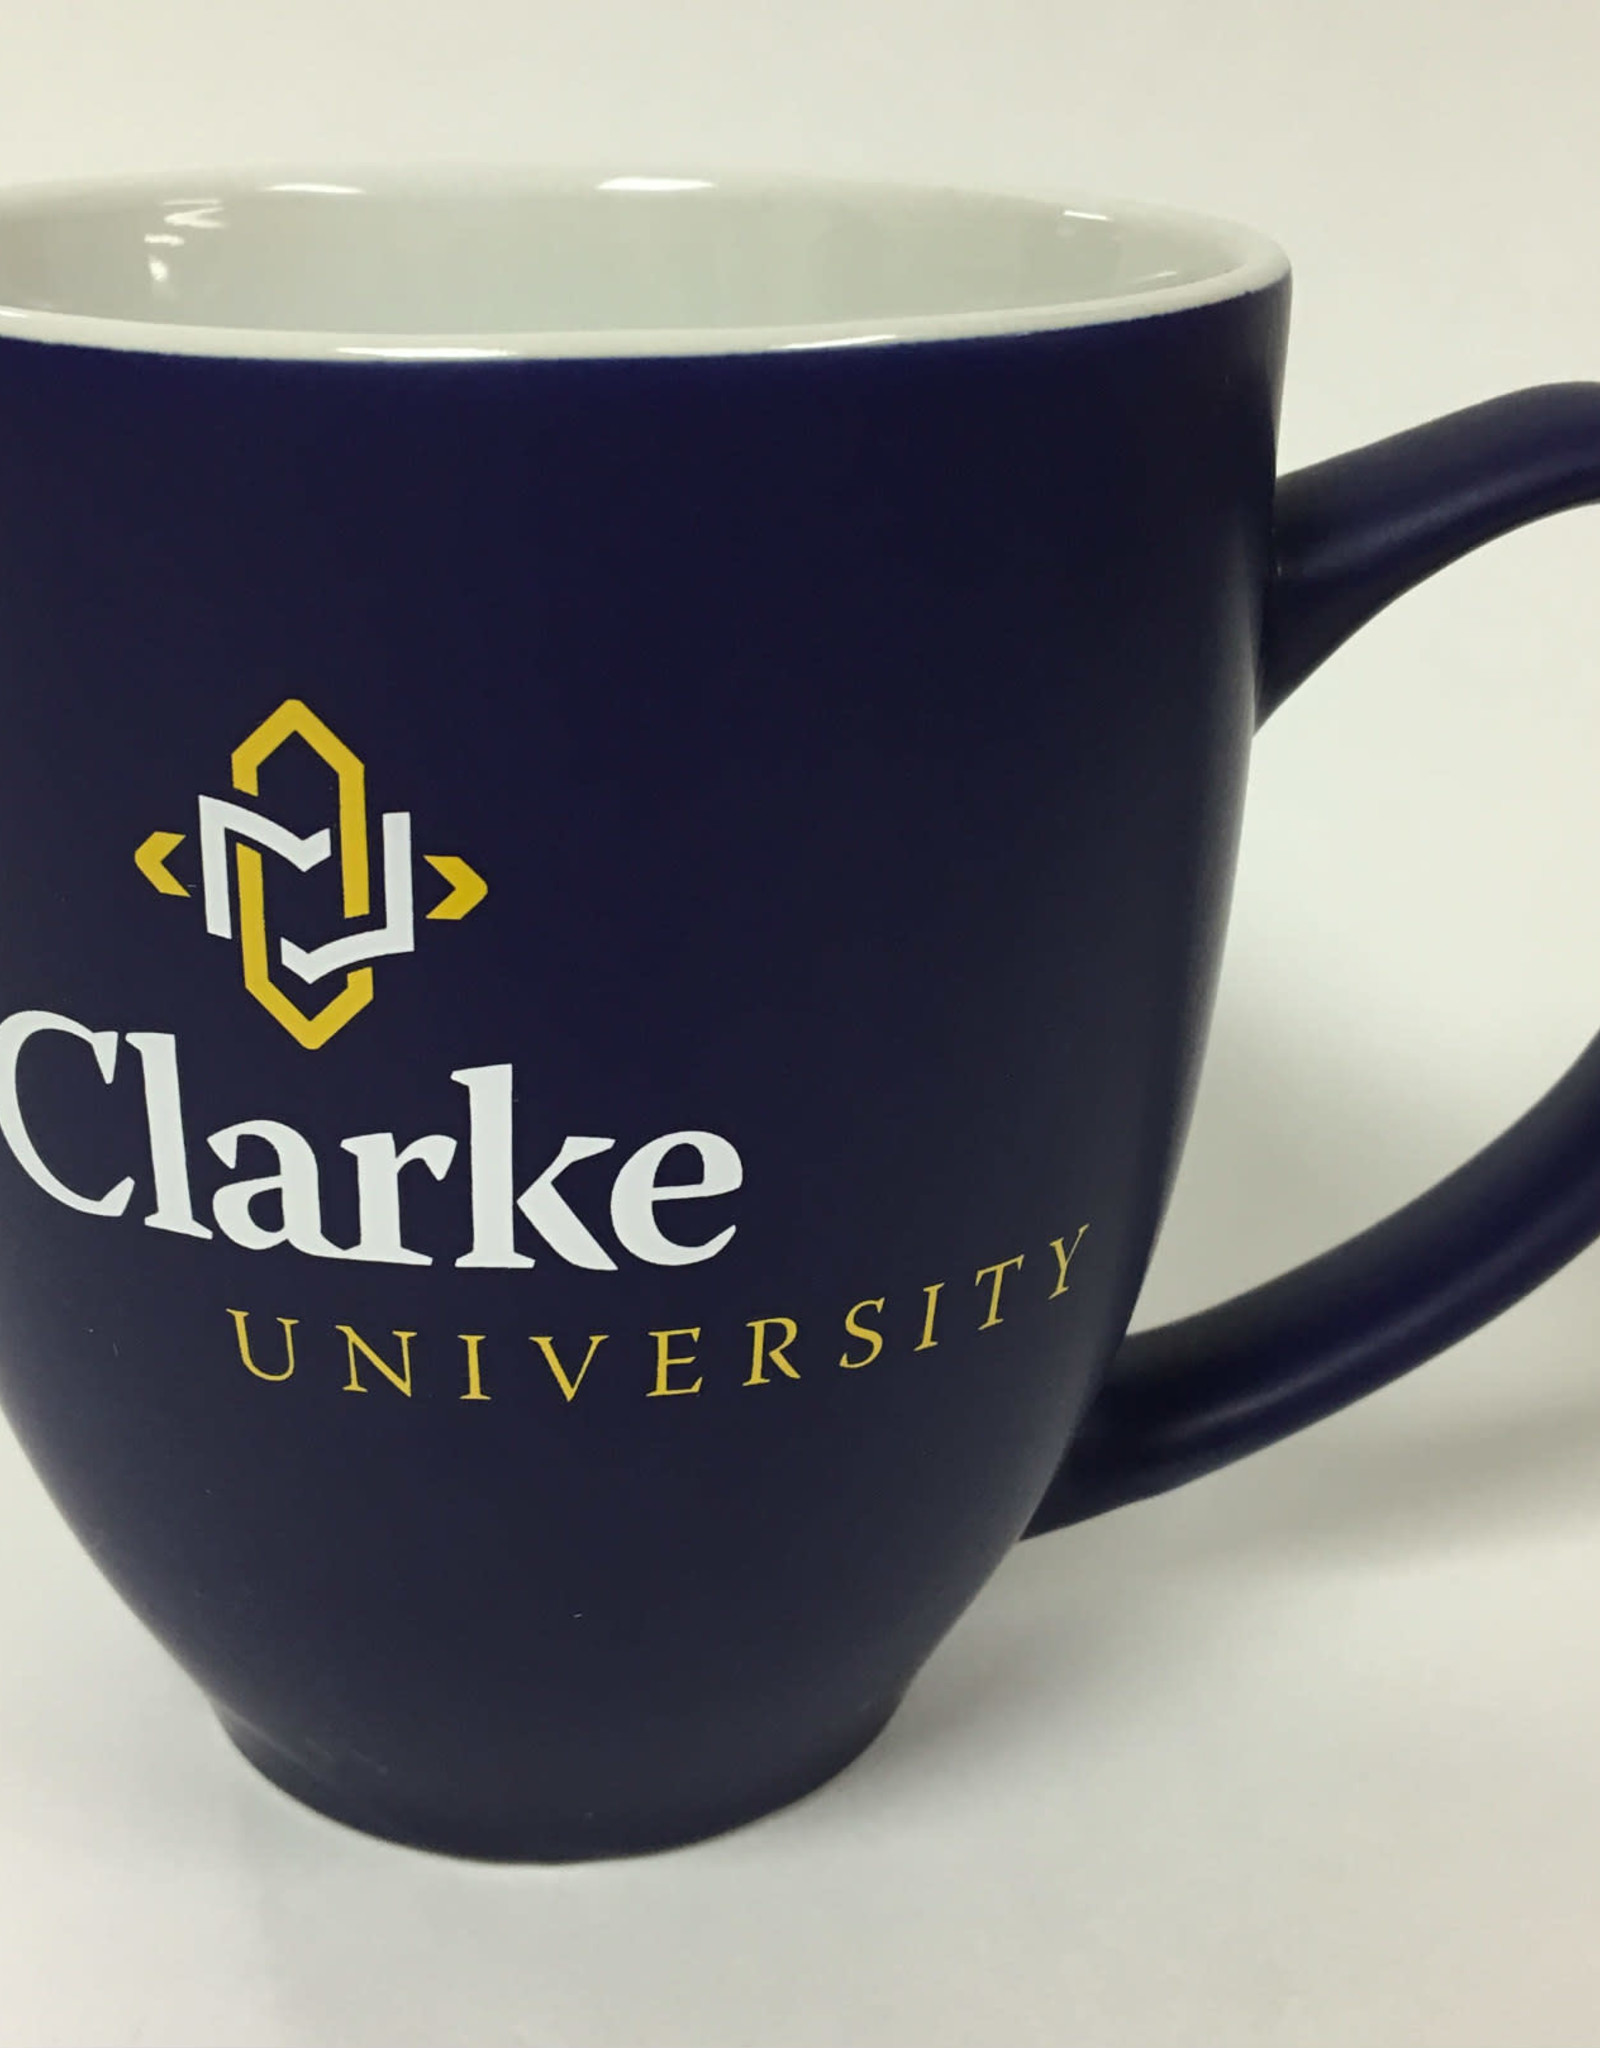 Clarke University Mug